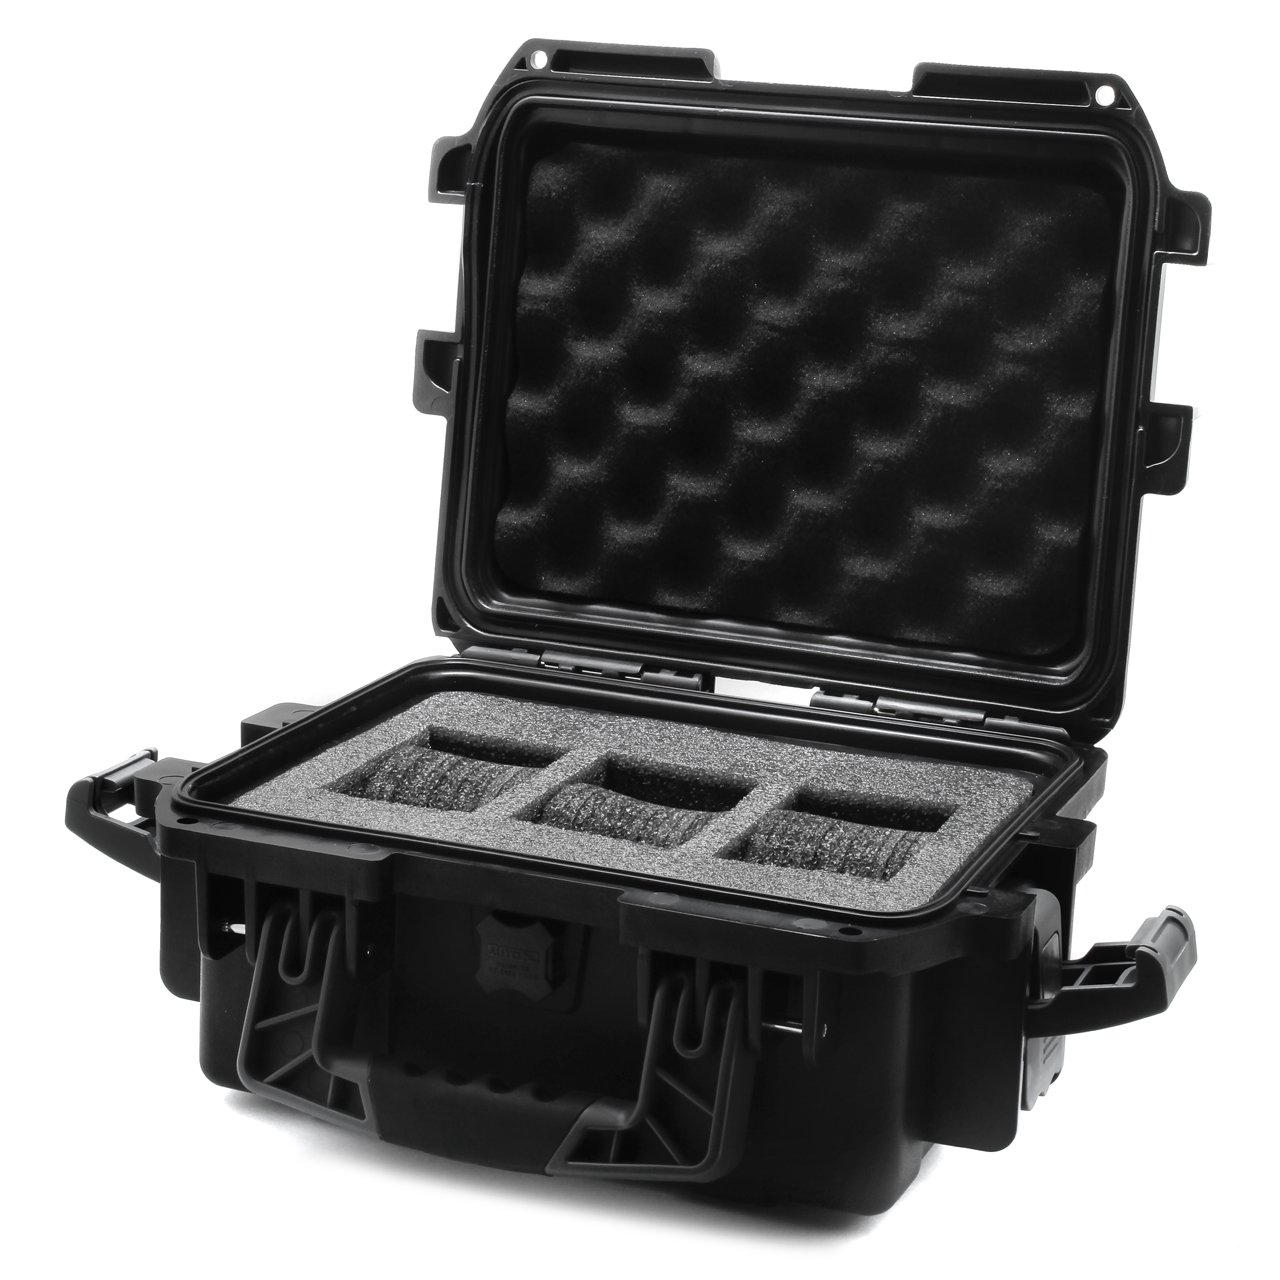 Invicta IG0097-SMIS-B 3 slot Black Plastic Watch Box Case